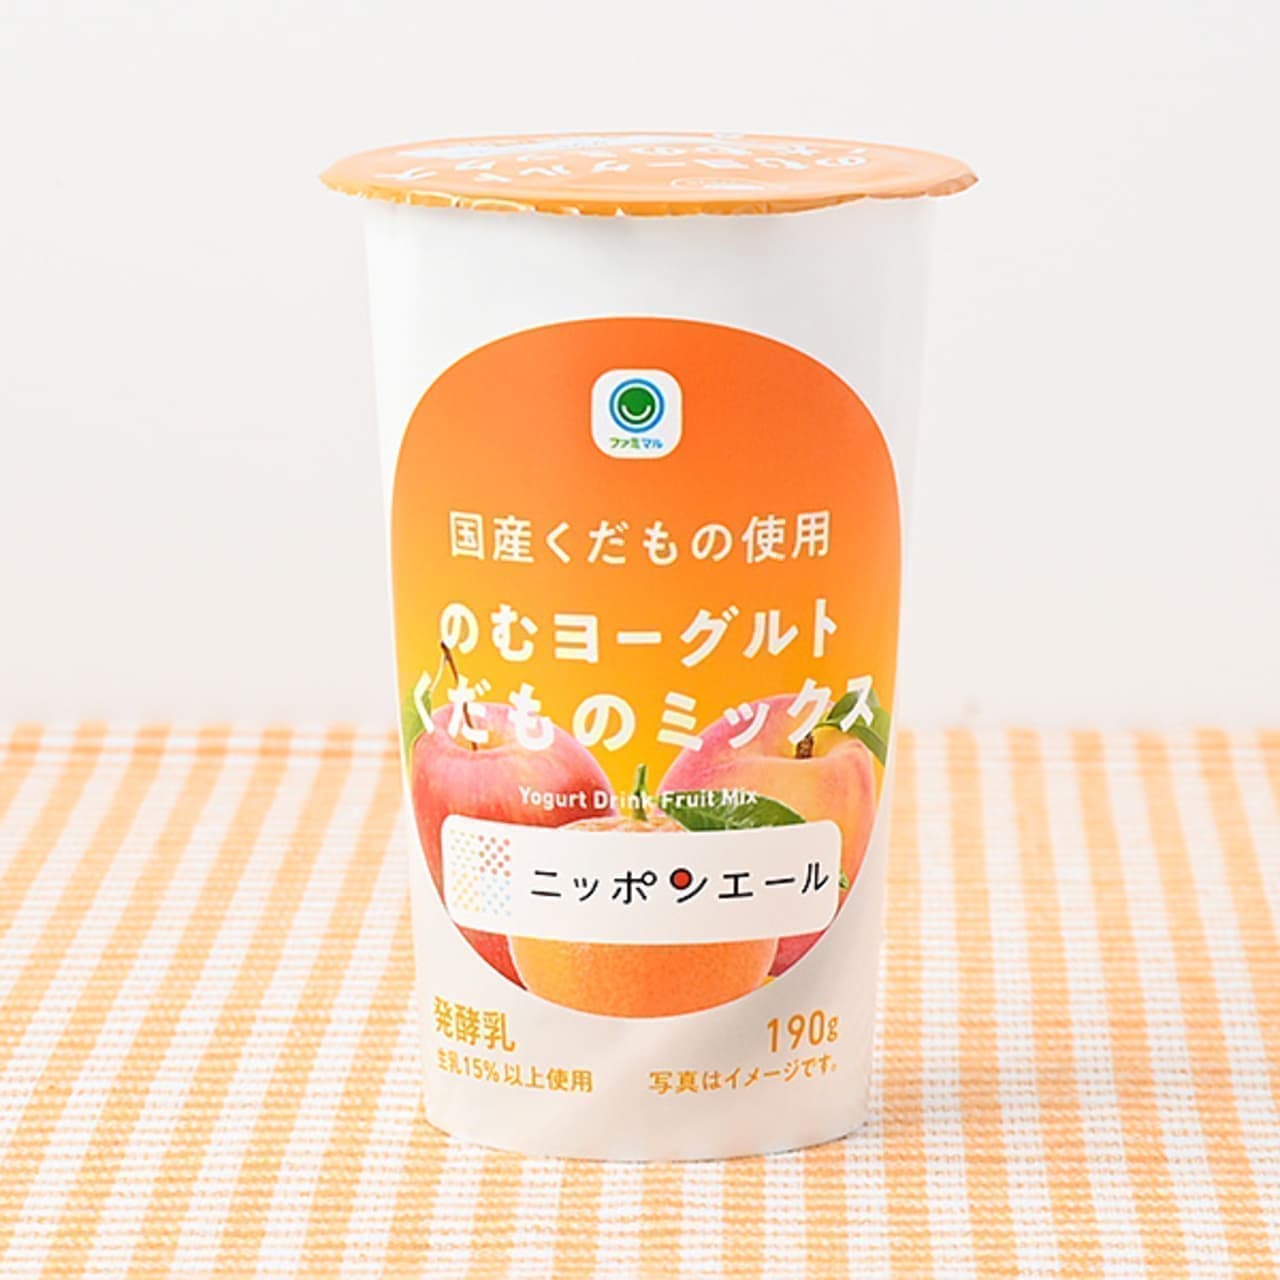 FamilyMart "Nomi Yogurt Fruit Mix